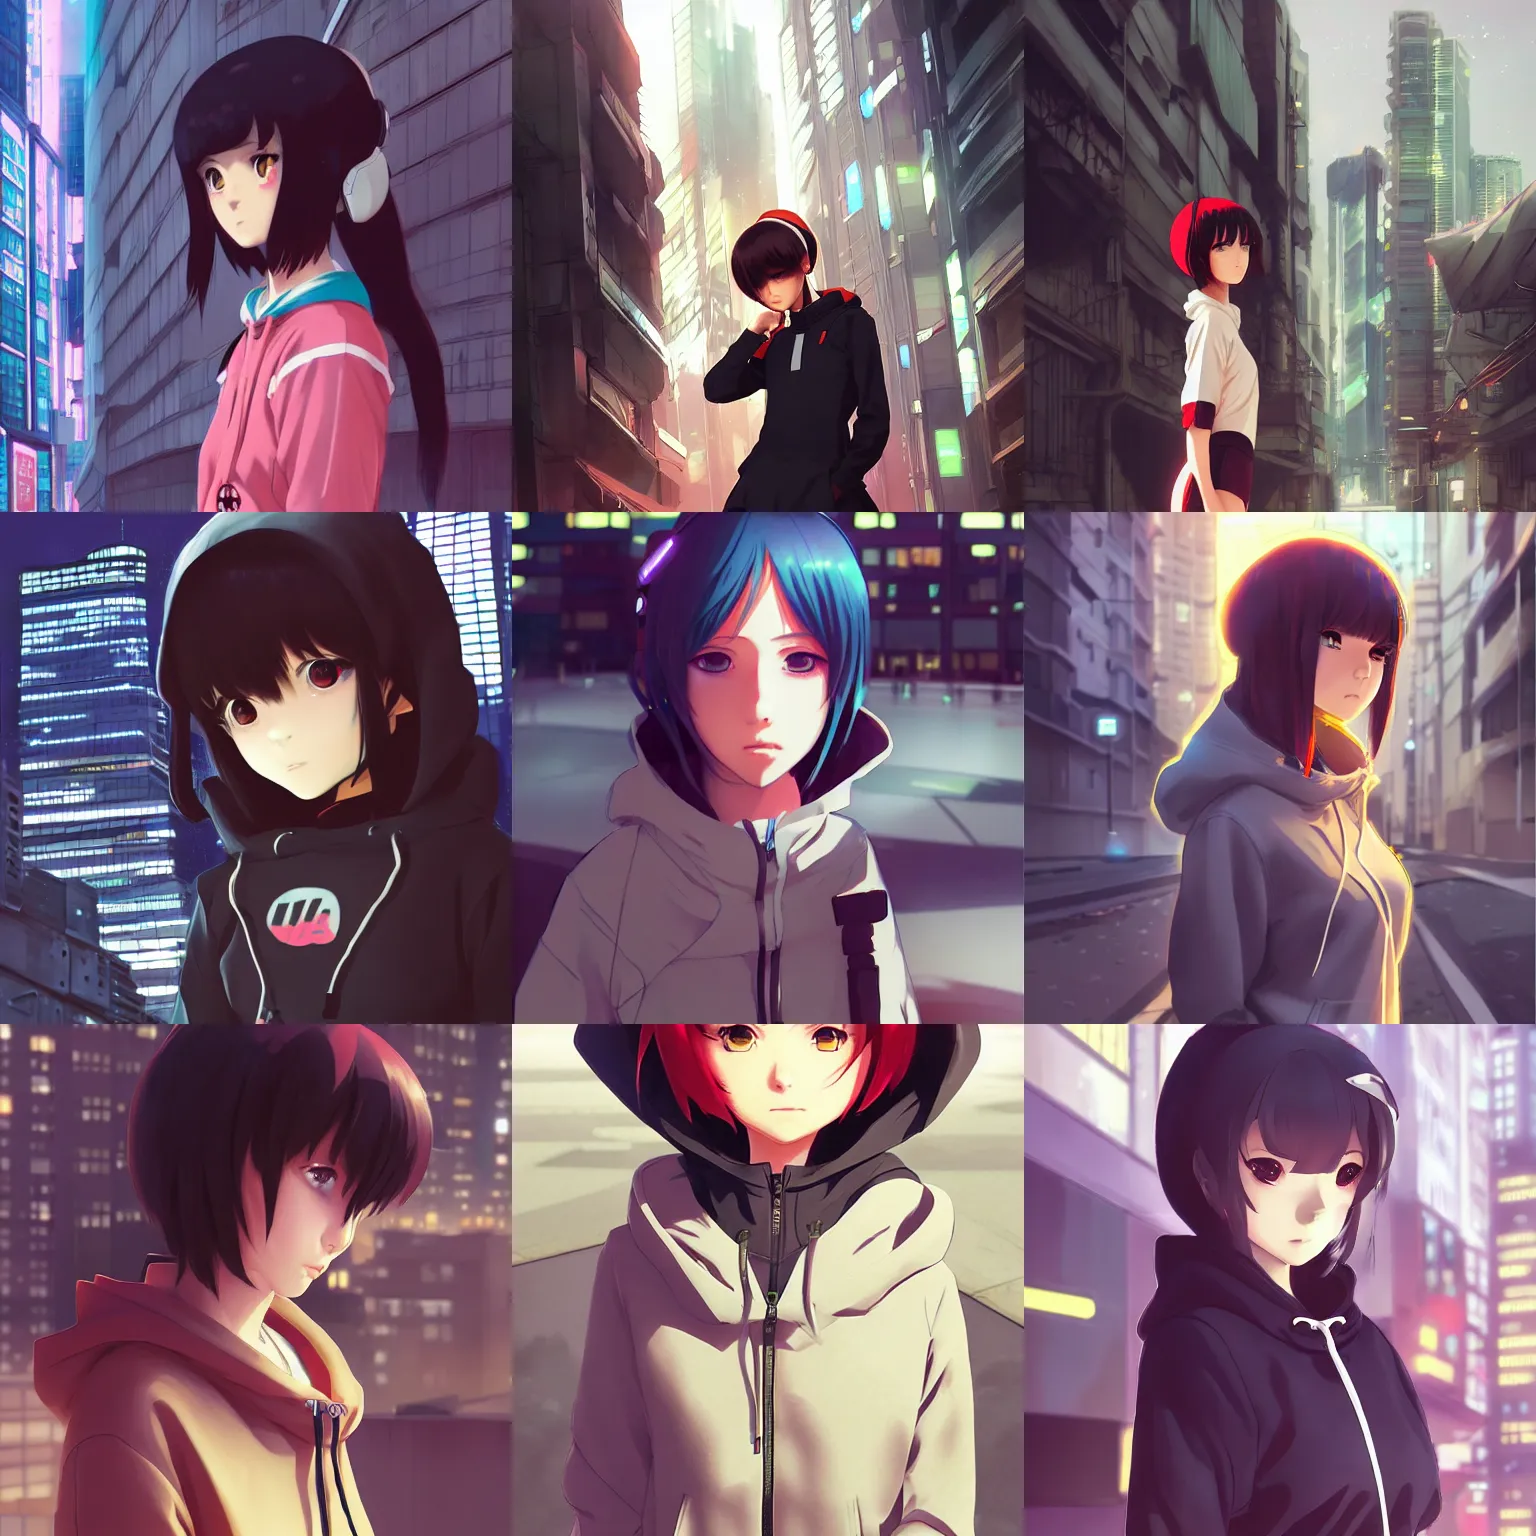 Prompt: profile of anime girl, ilya kuvshinov, wearing hoodie in a cyberpunk city, digital anime art, wlop, ilya kuvshinov, artgerm, krenz cushart, greg rutkowski, studio ghibli